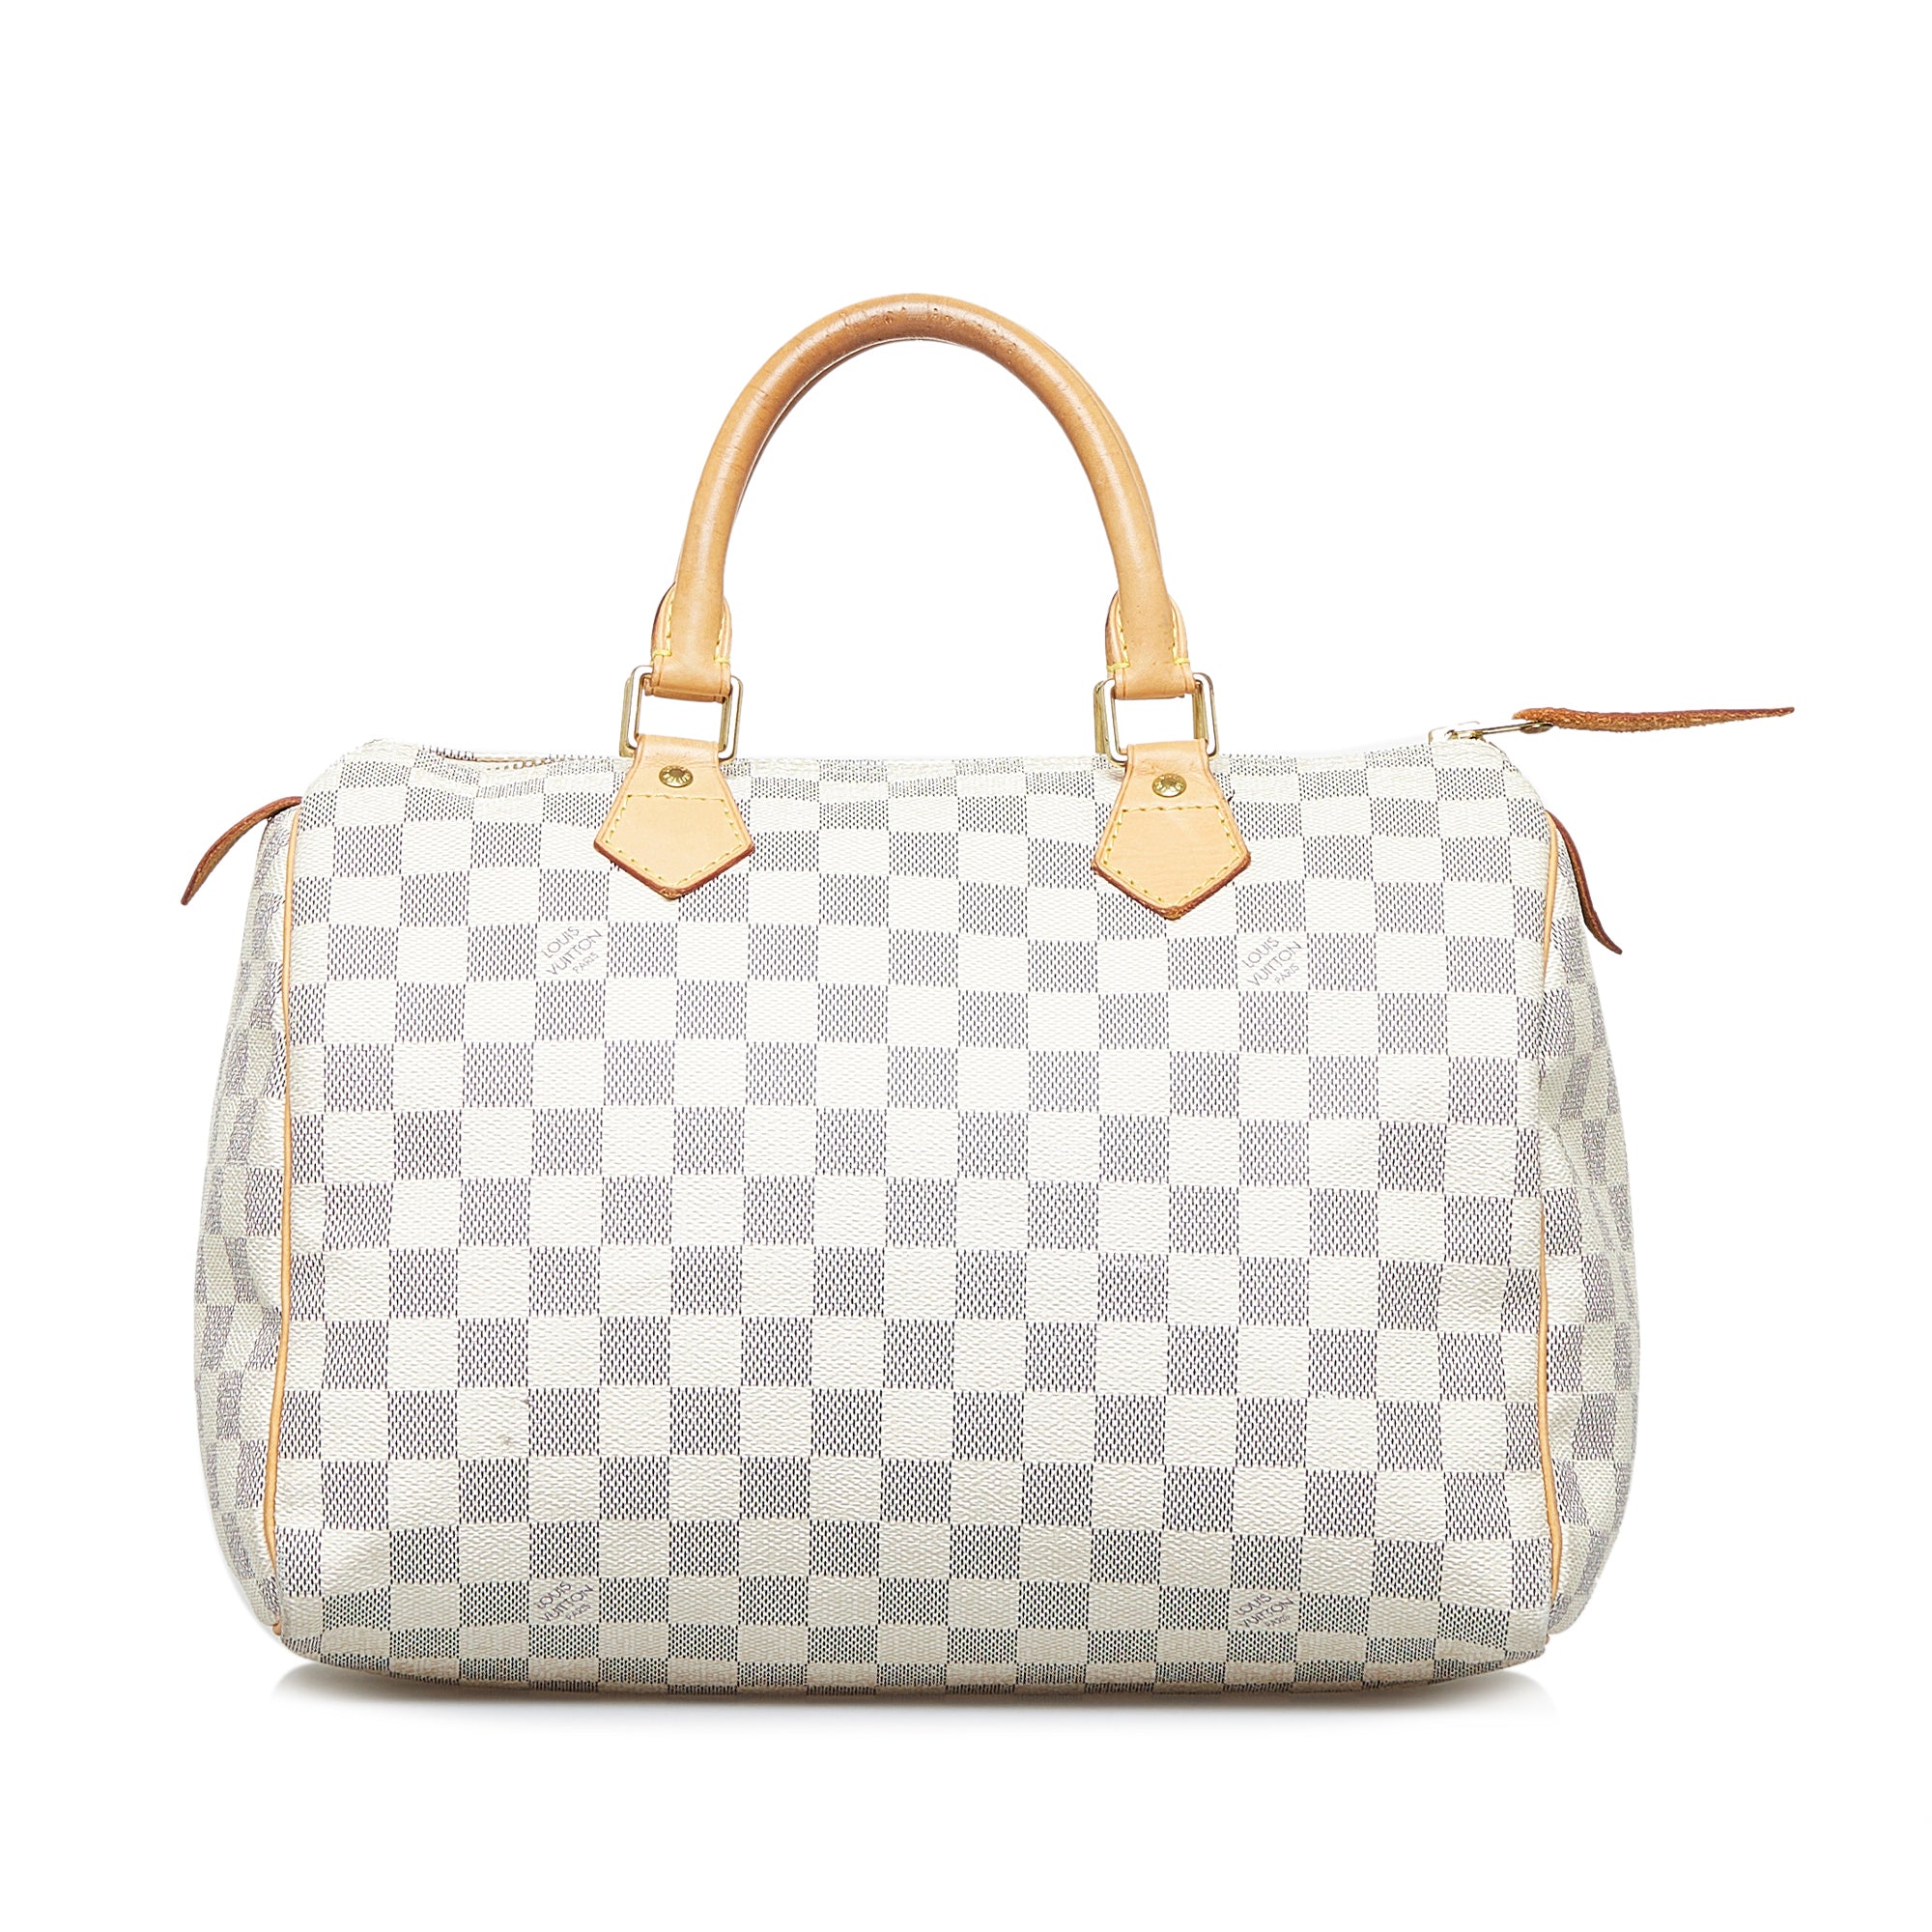 $1000 Louis Vuitton Classic Damier Azur White Speedy 30 Tote Bag